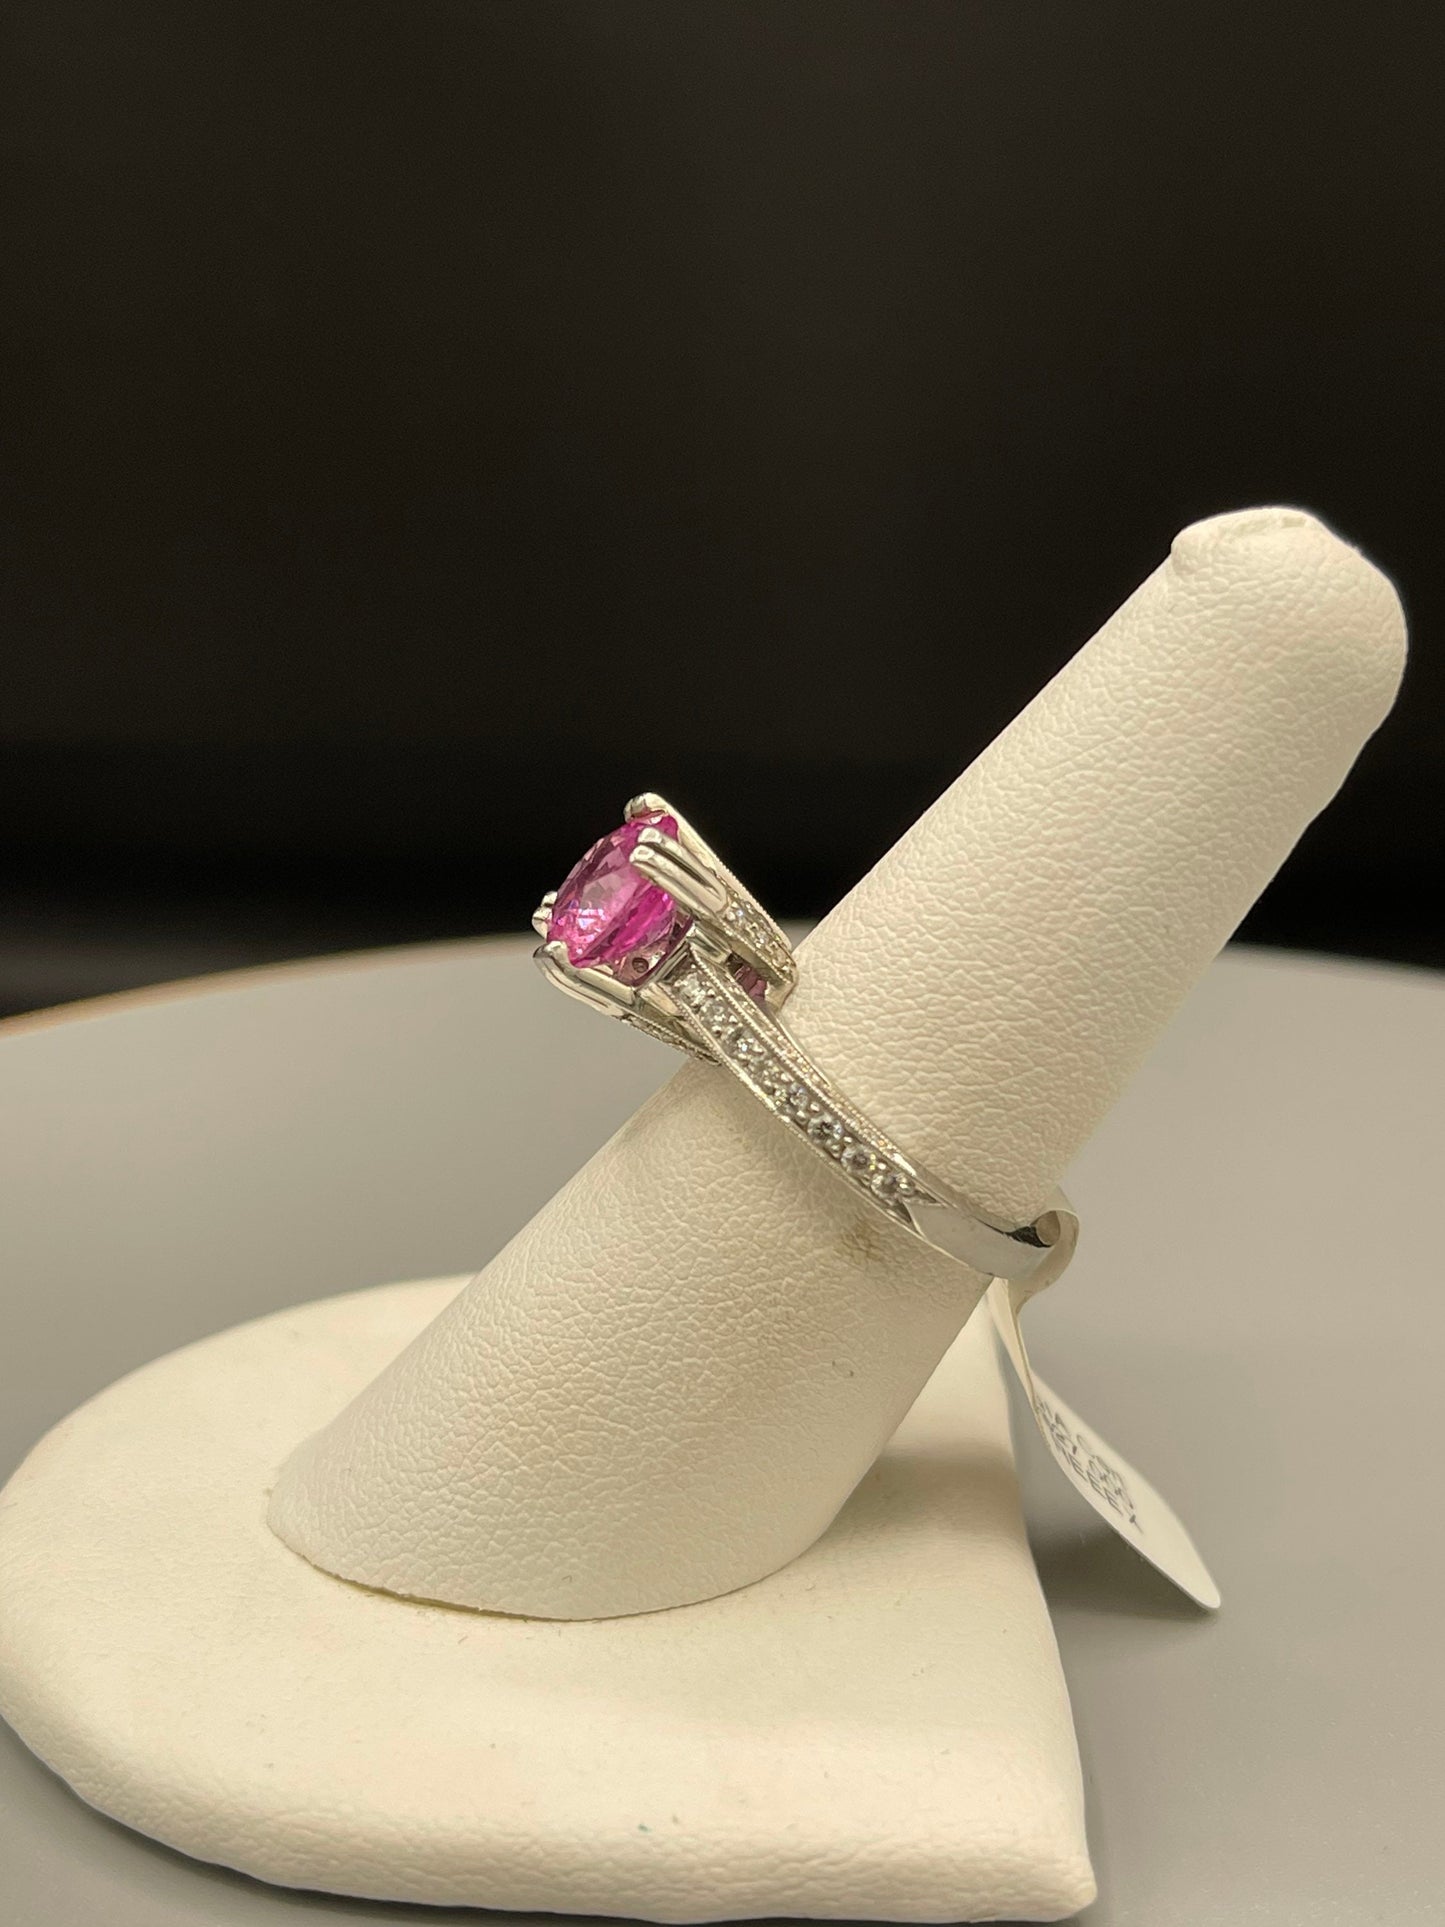 3.91 Carat GIA Certified Pink Sapphire & Diamond Platinum Engagement Ring (Size 6.5)